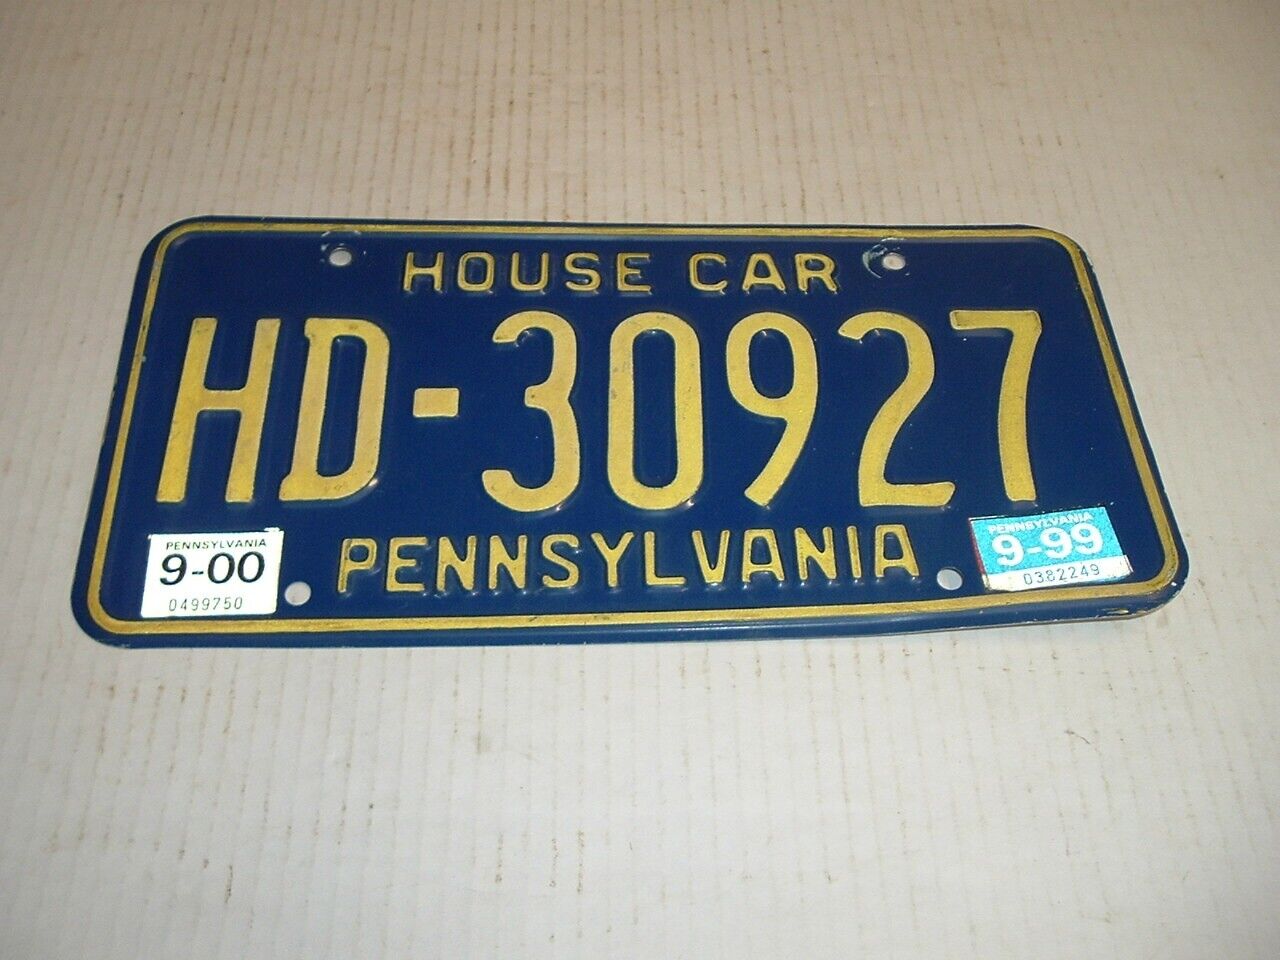 Pennsylvania House Car License Plate HD30927